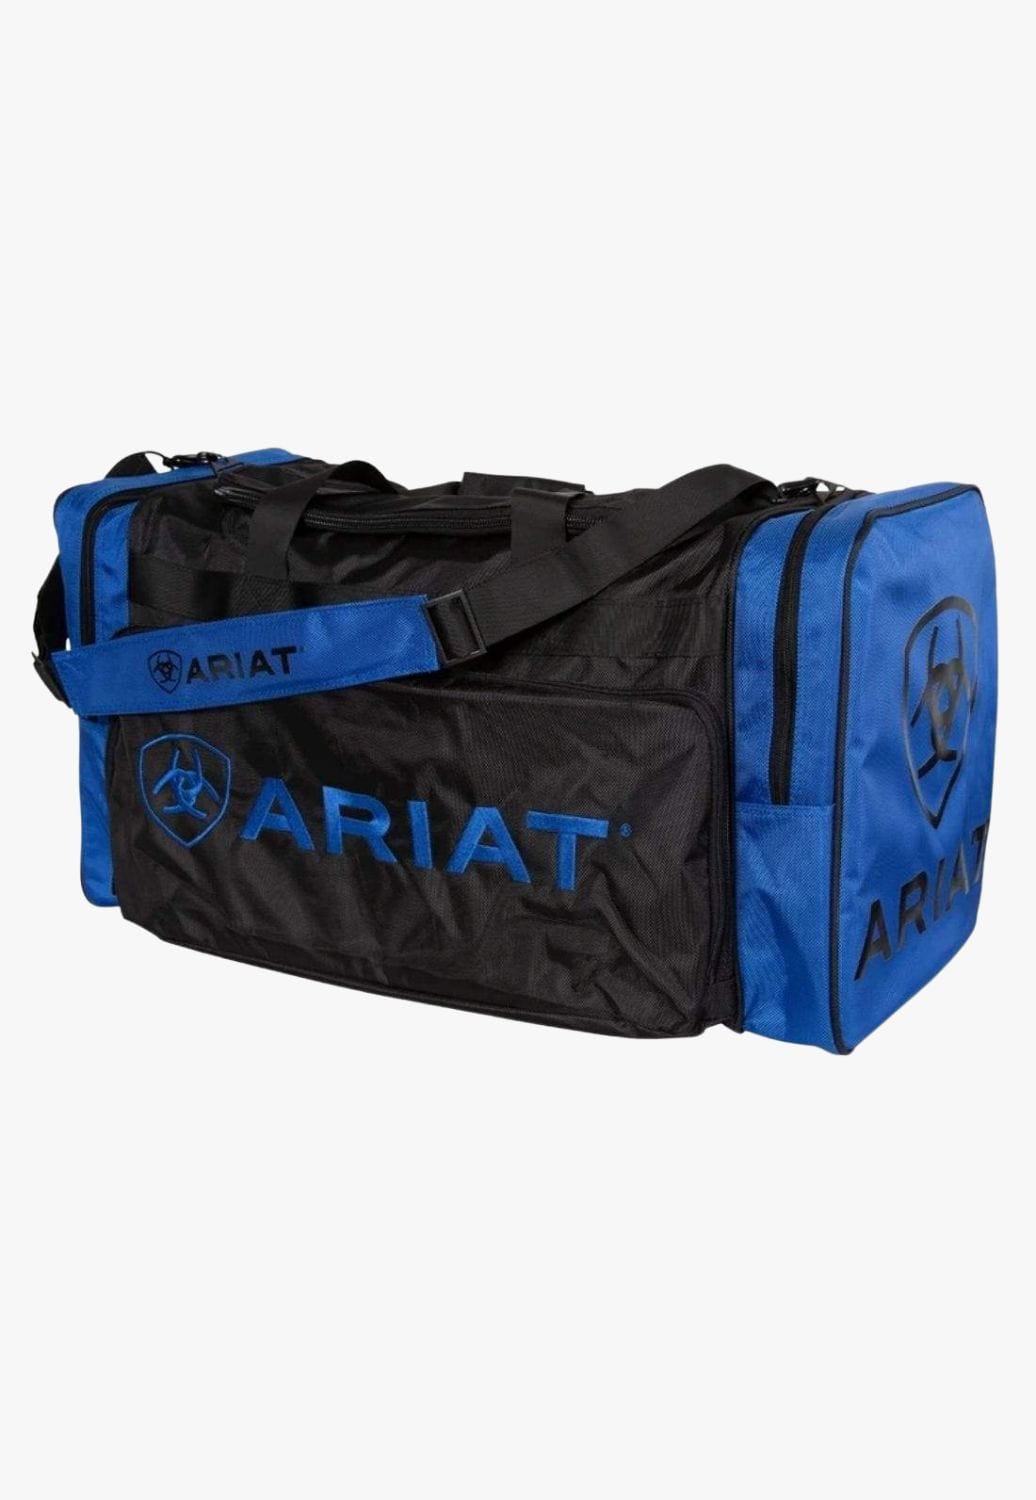 Ariat TRAVEL - Travel Bags Cobalt/Black Ariat Junior Gear Bag